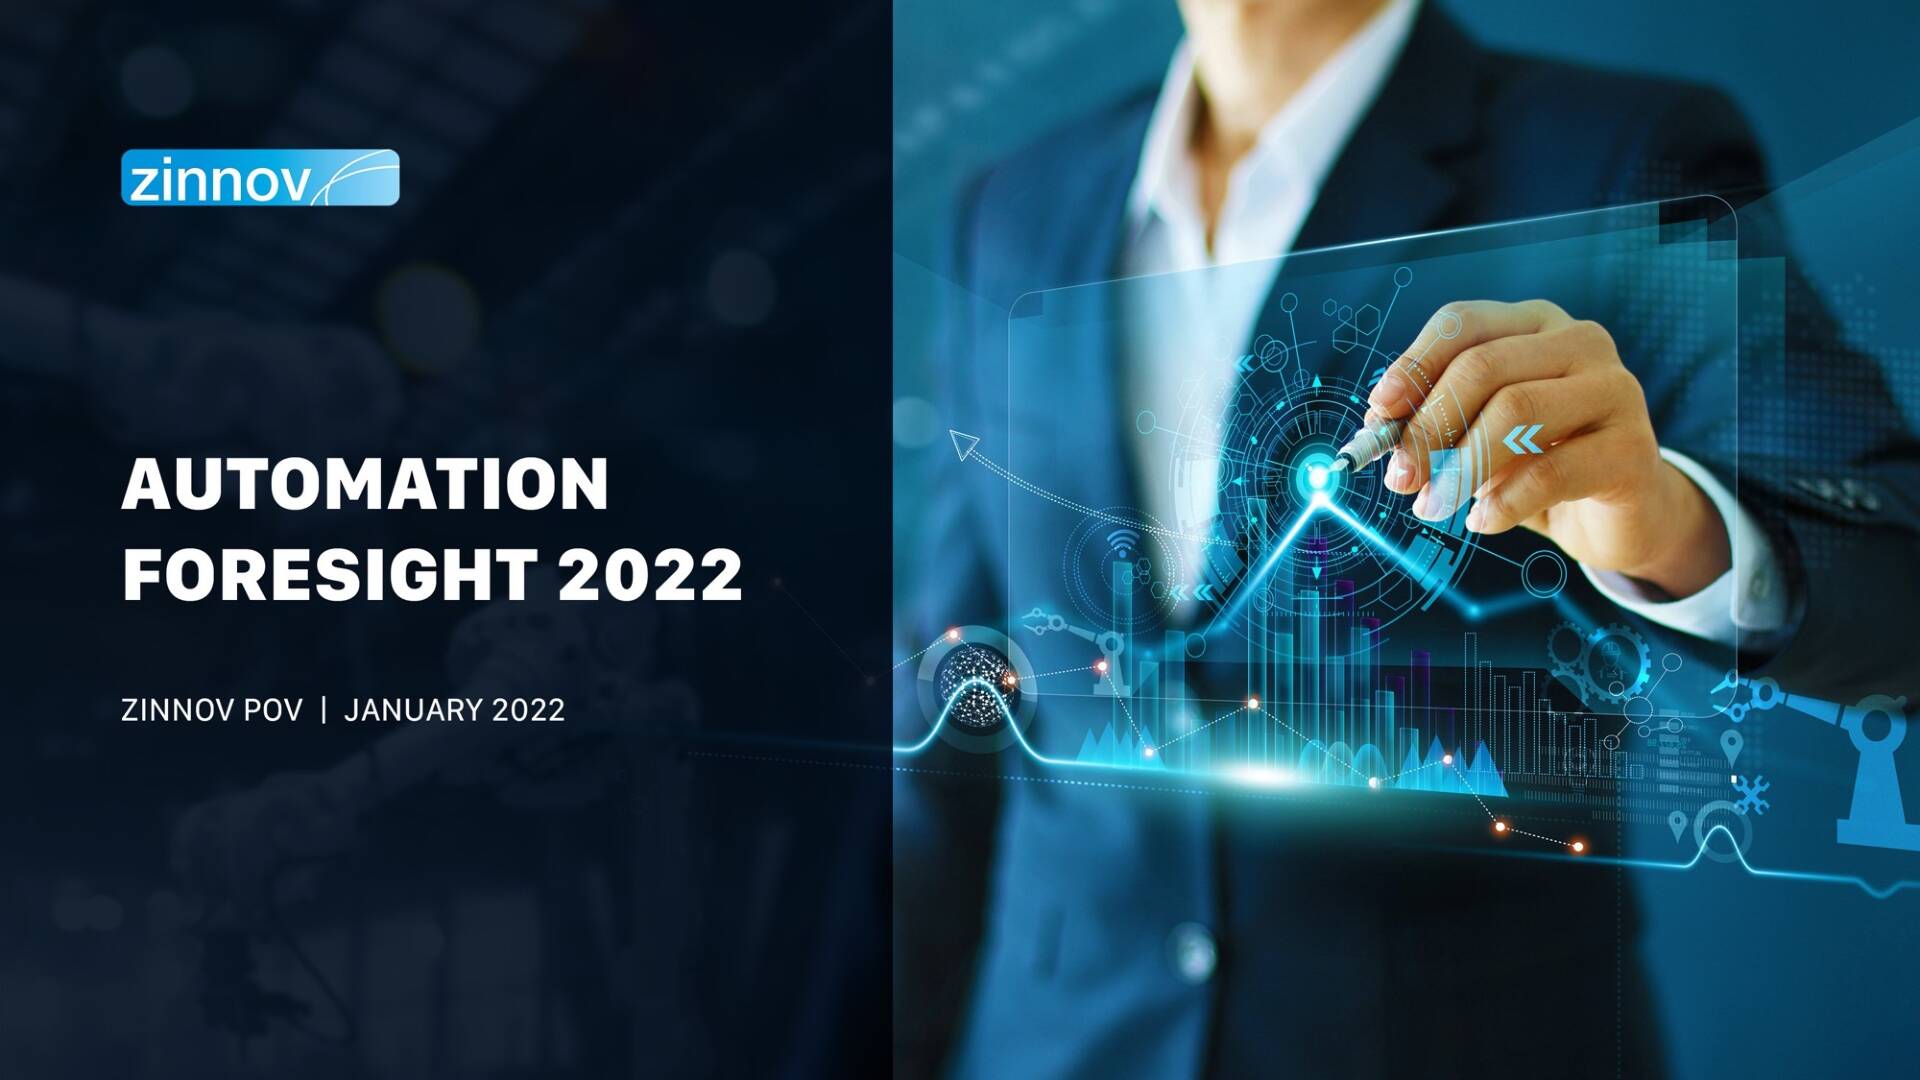 Zinnov Automation Foresight 2022 Pov1